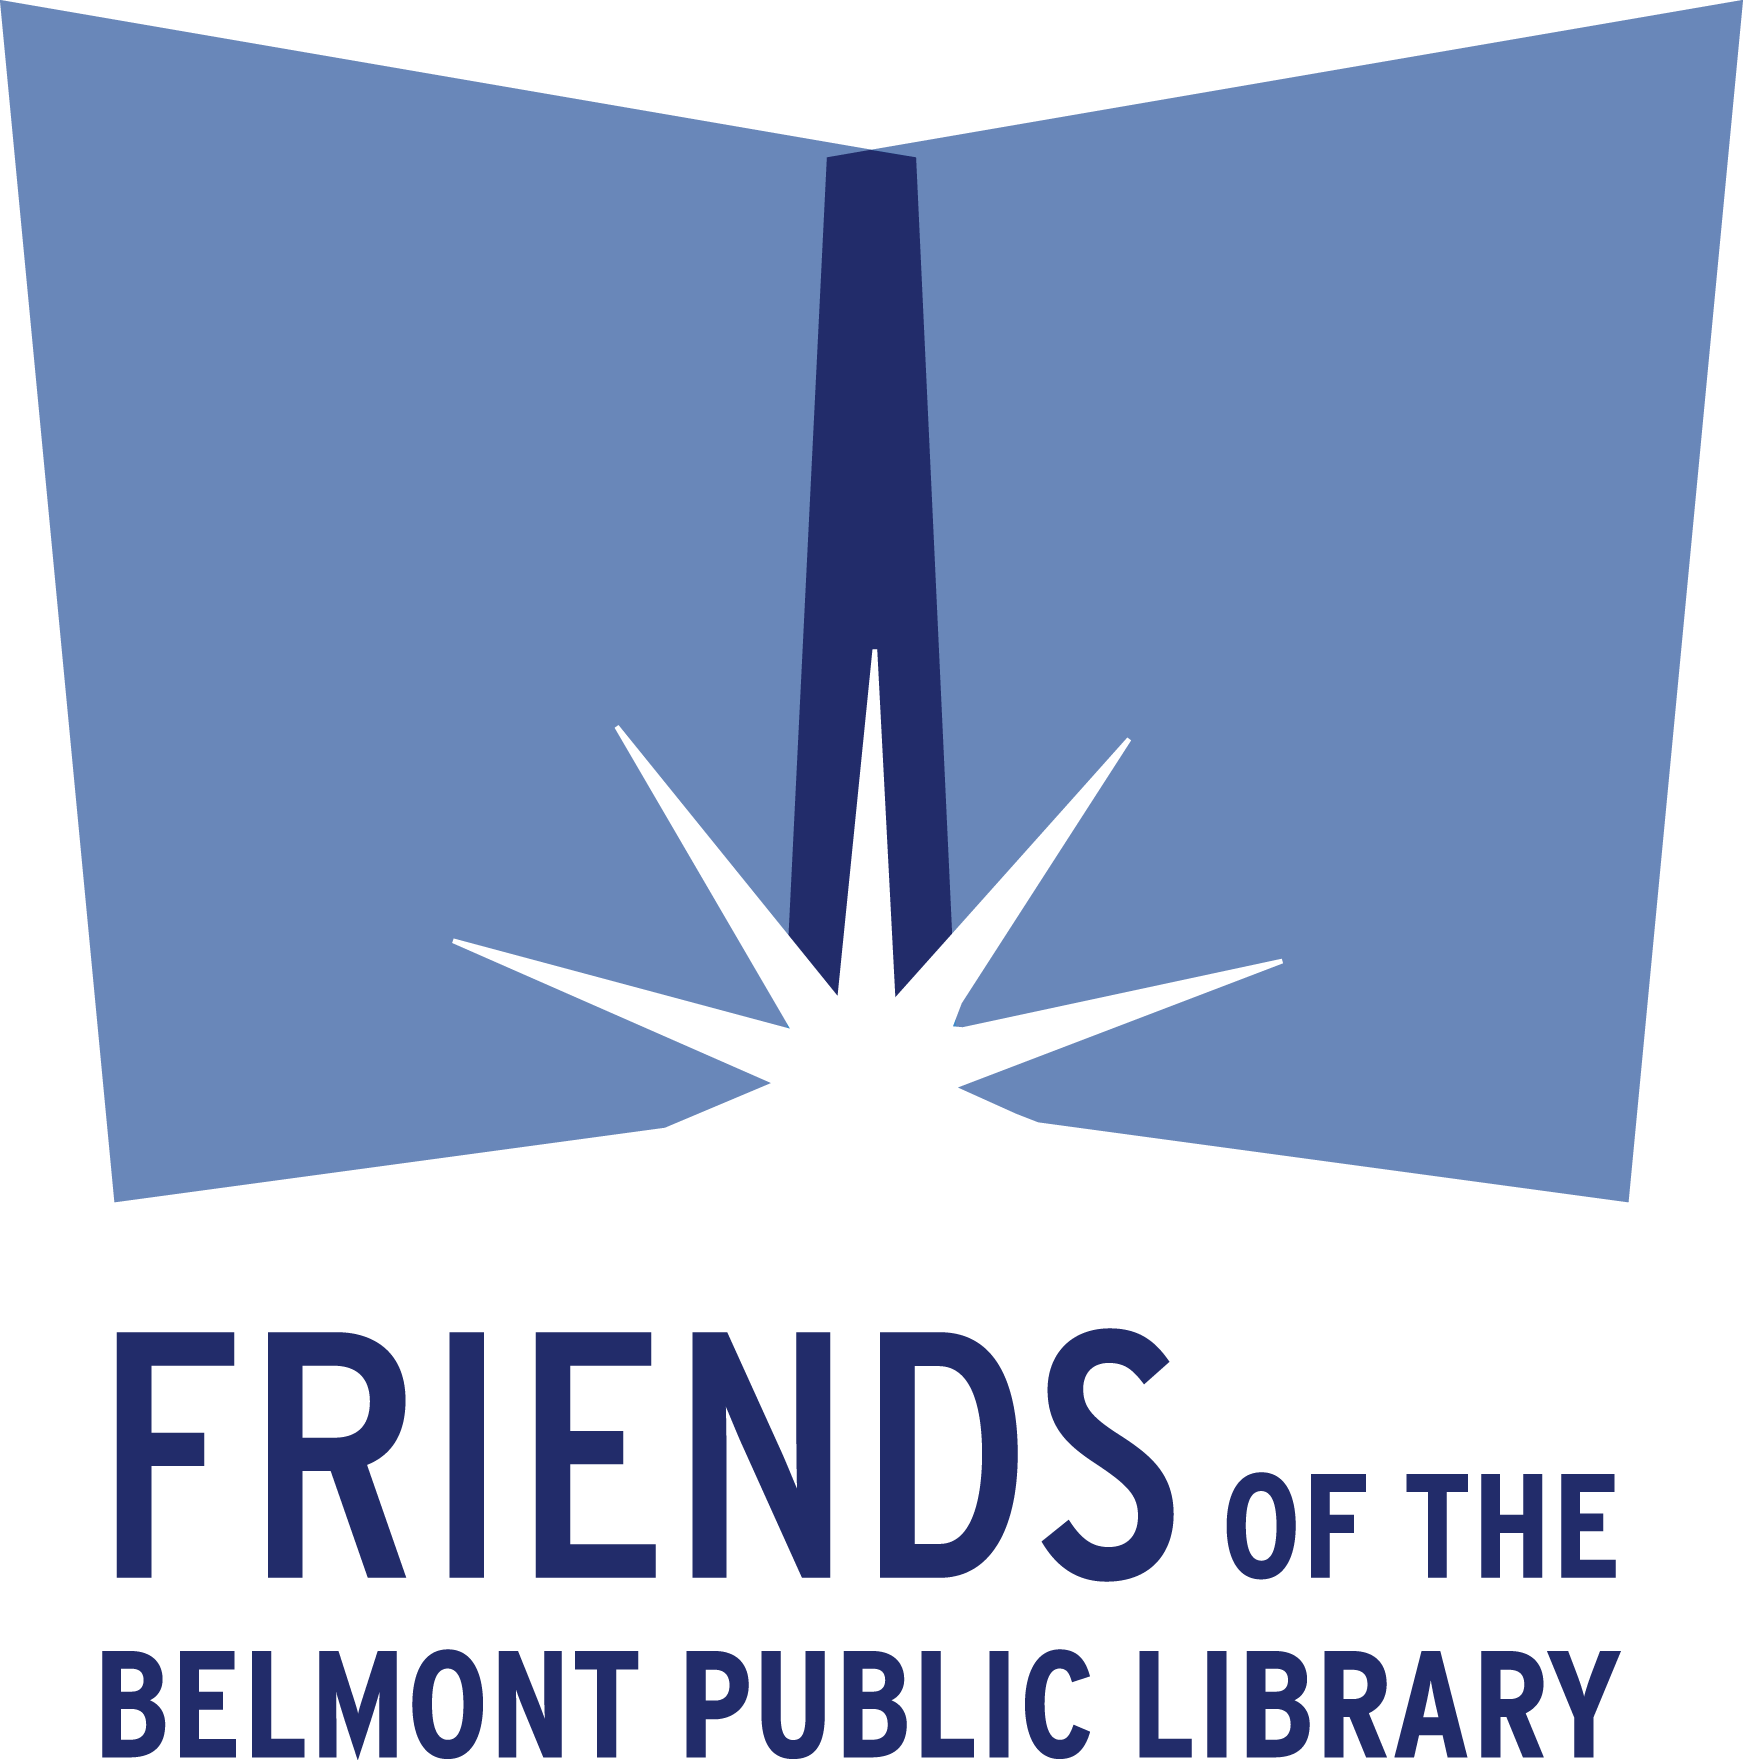 Friends of the Belmont Public Library logo